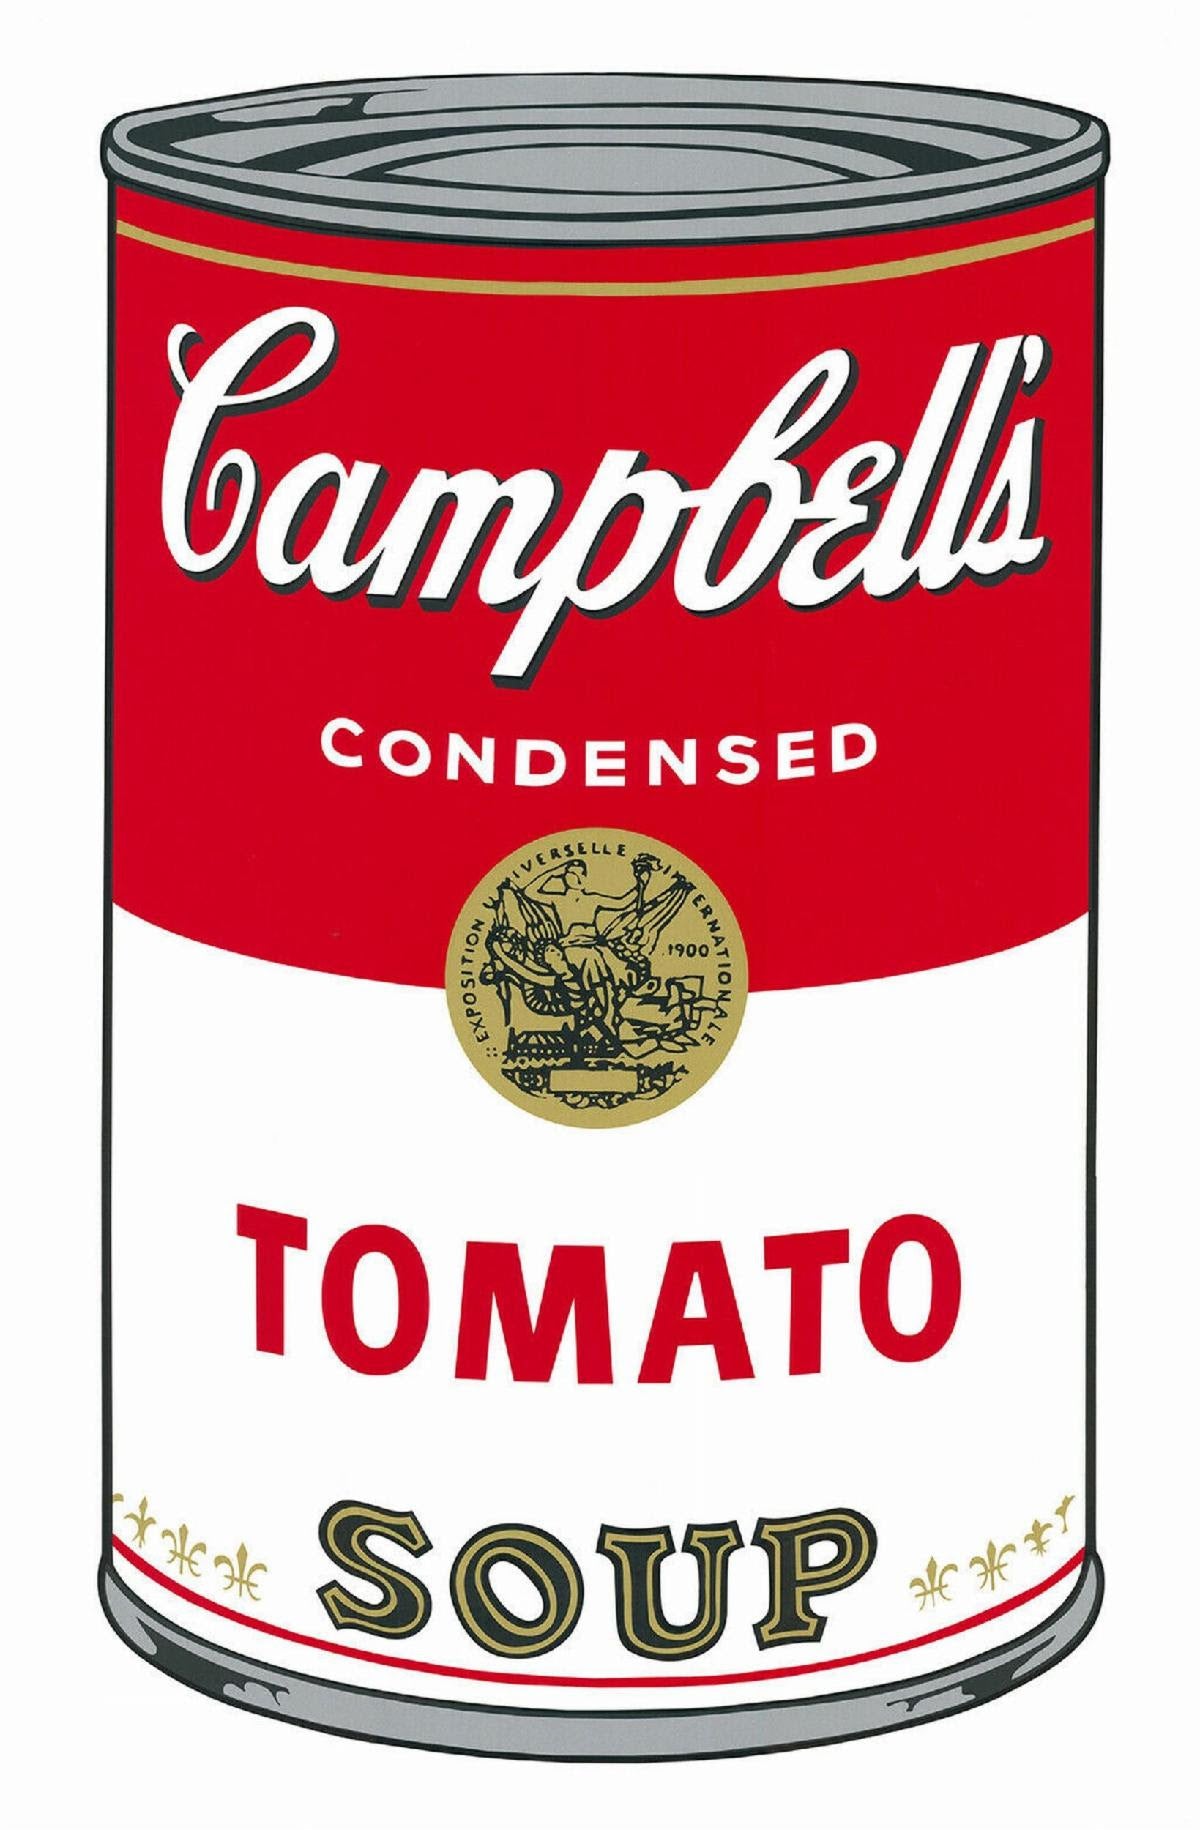 Sunday B. Morning, 'Campbell's Soup I - Tomato'